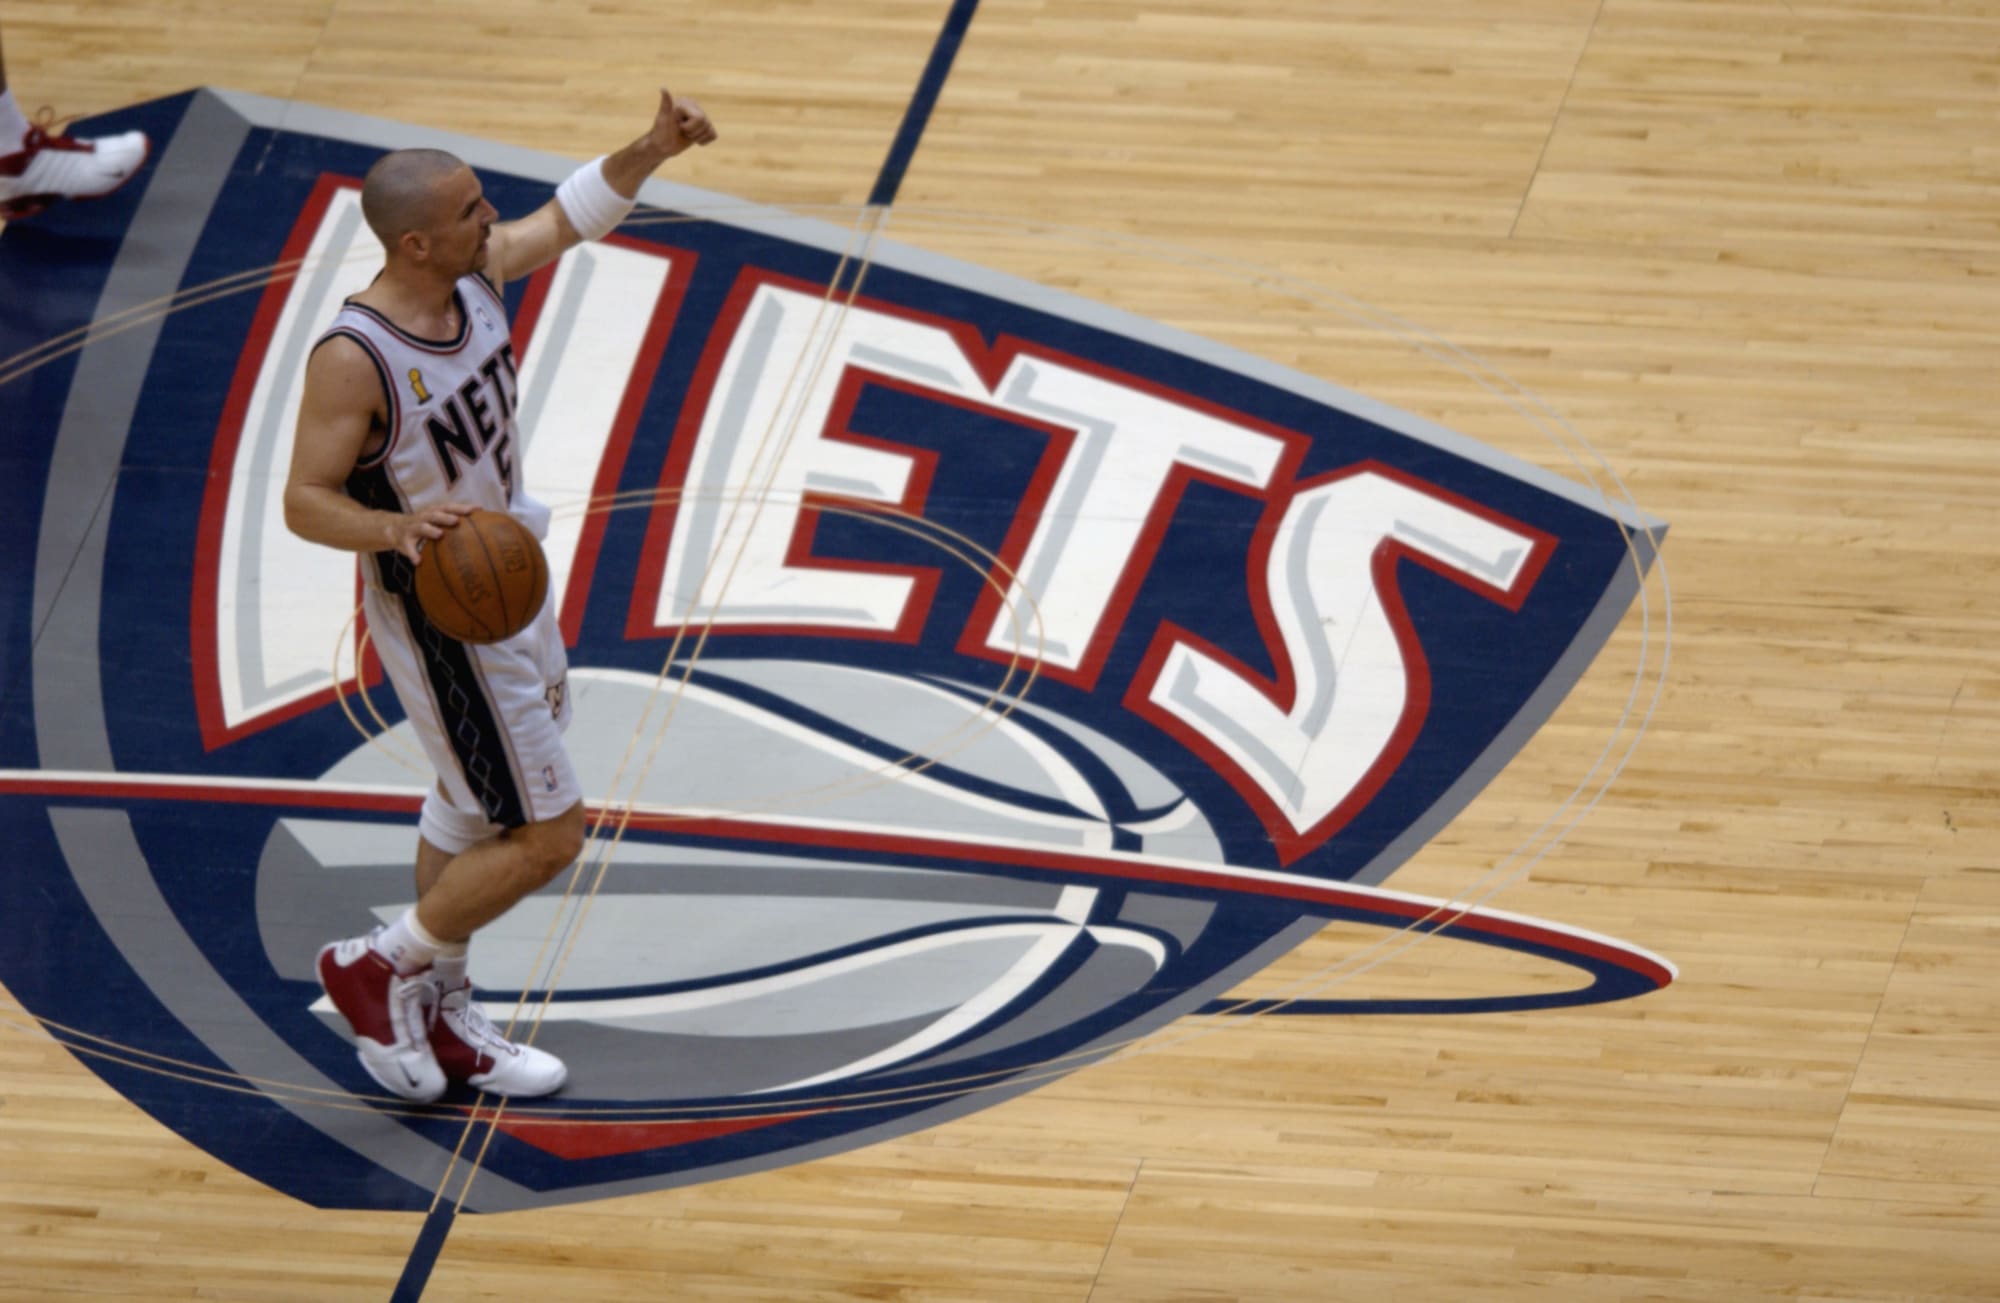 Brooklyn Nets: Top 5 plays from Jason Kidd's illustrious career